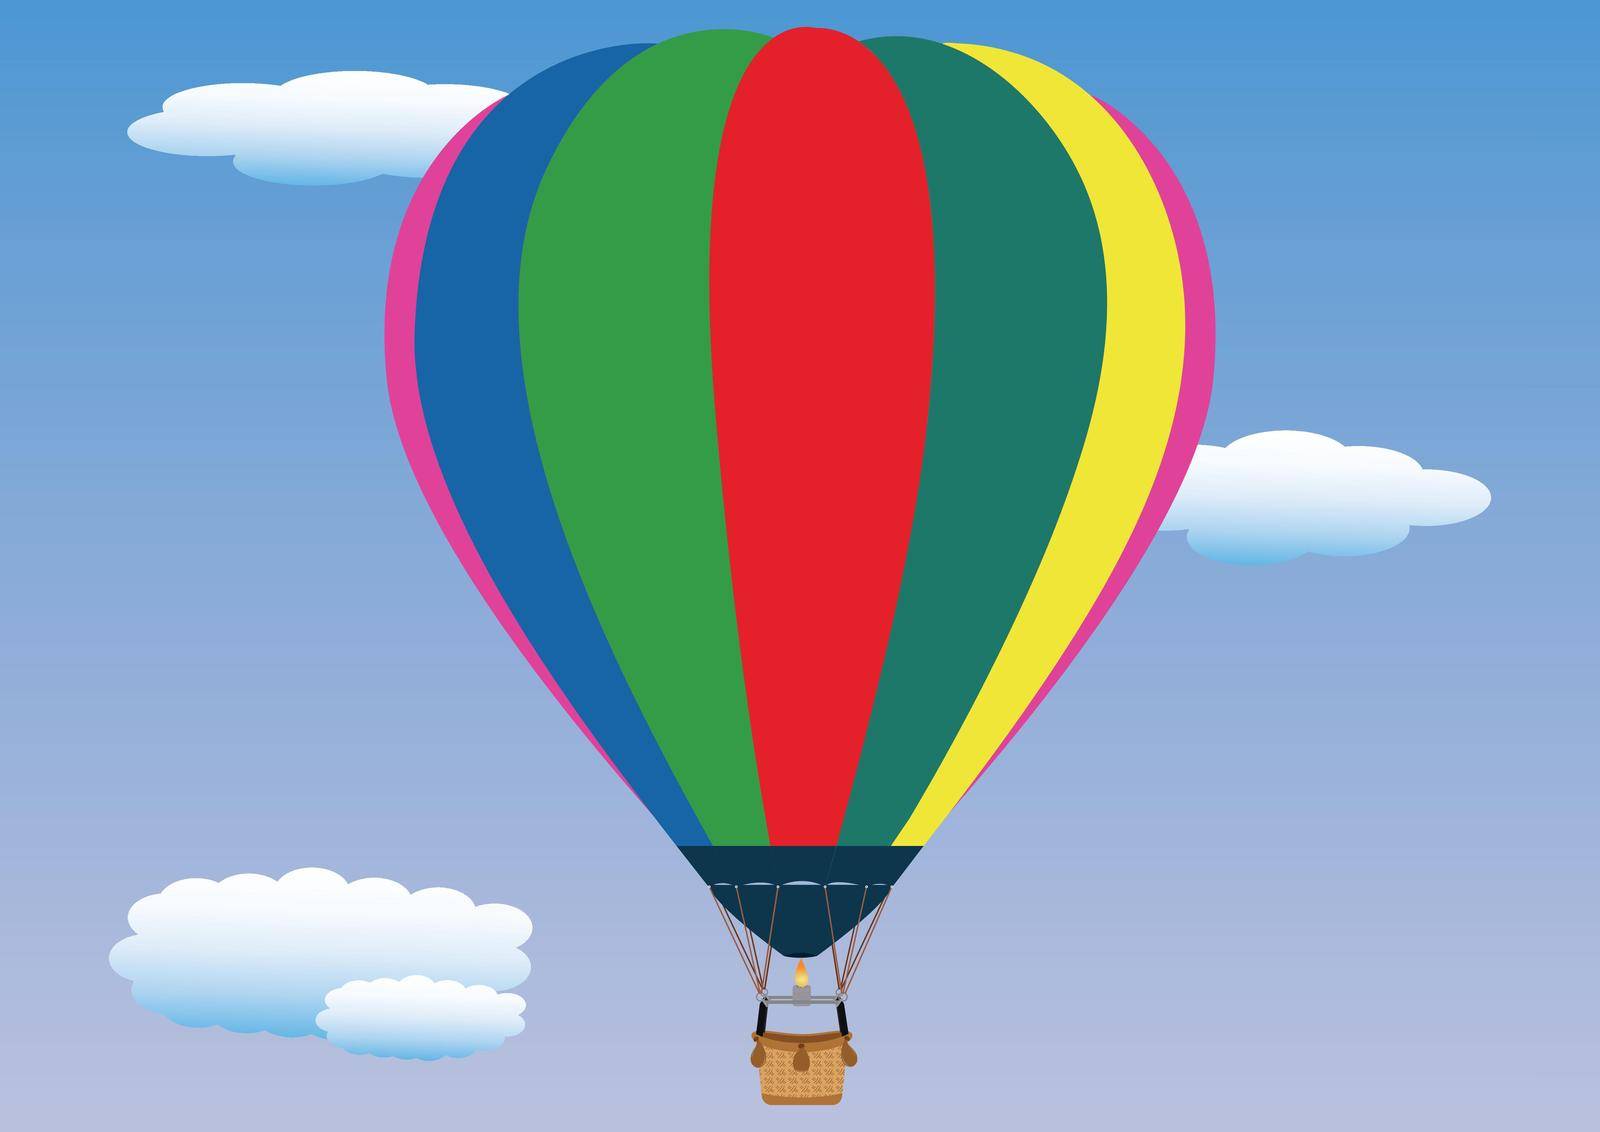 Clipart hot air balloon. Colorful hot air balloons flying. hot air balloon in the sky by mihaigr10